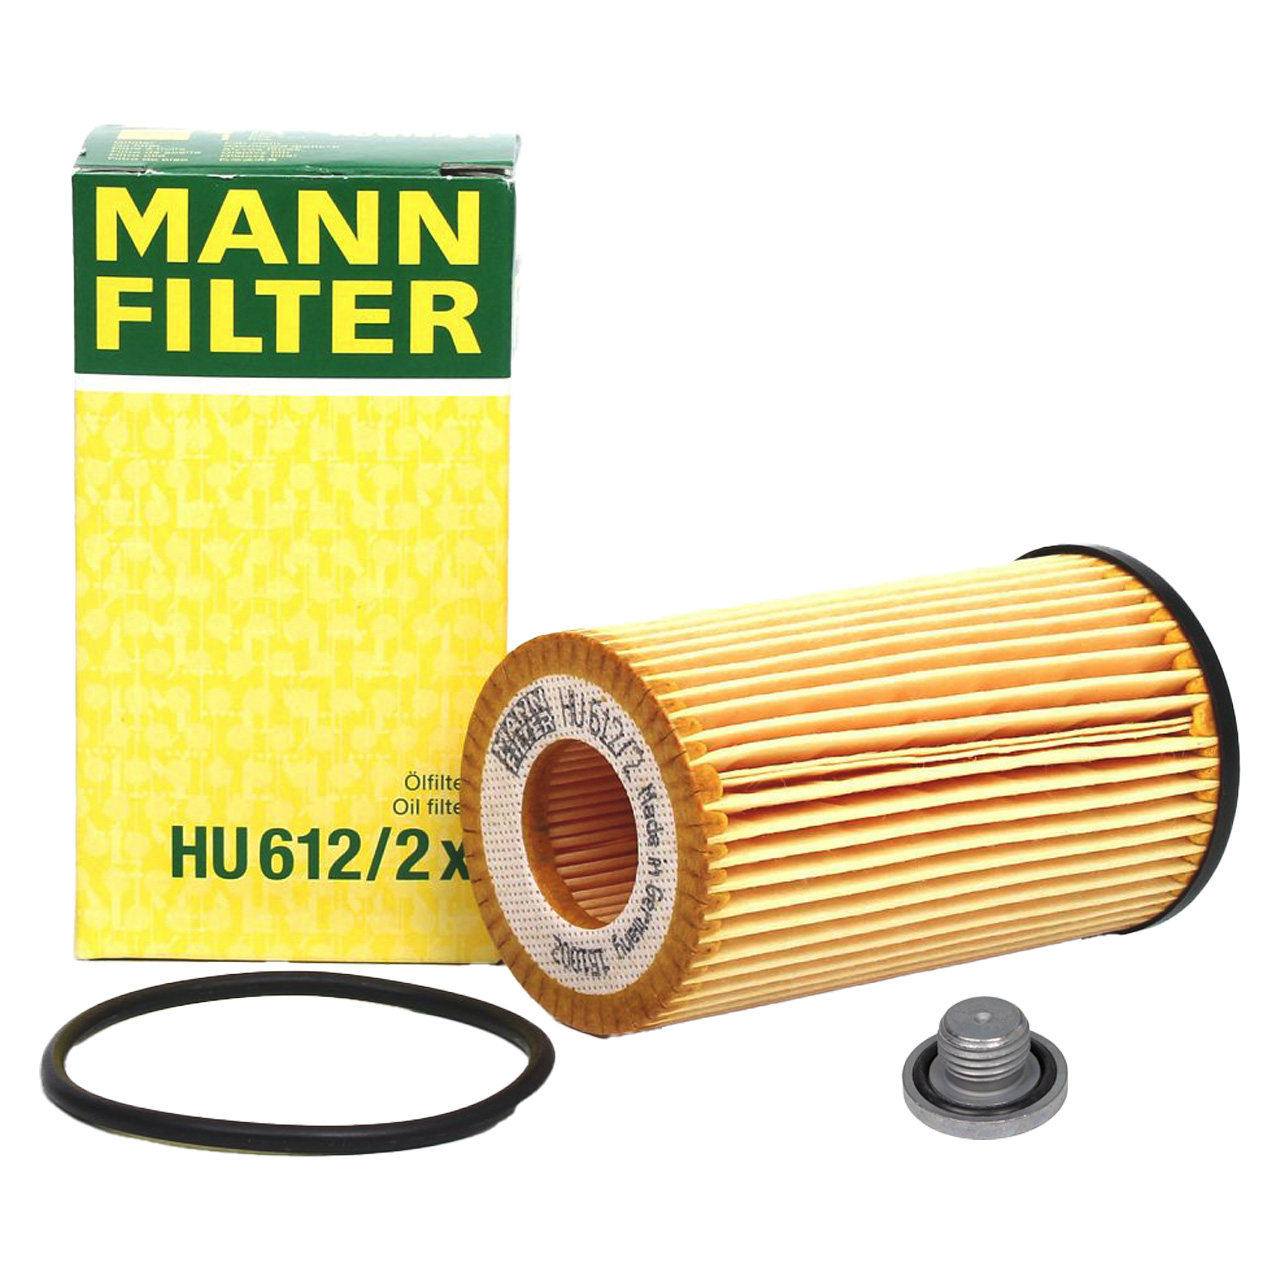 MANN HU612/2x Ölfilter + Schraube für ALFA ROMEO CHEVROLET FIAT OPEL SAAB SUZUKI